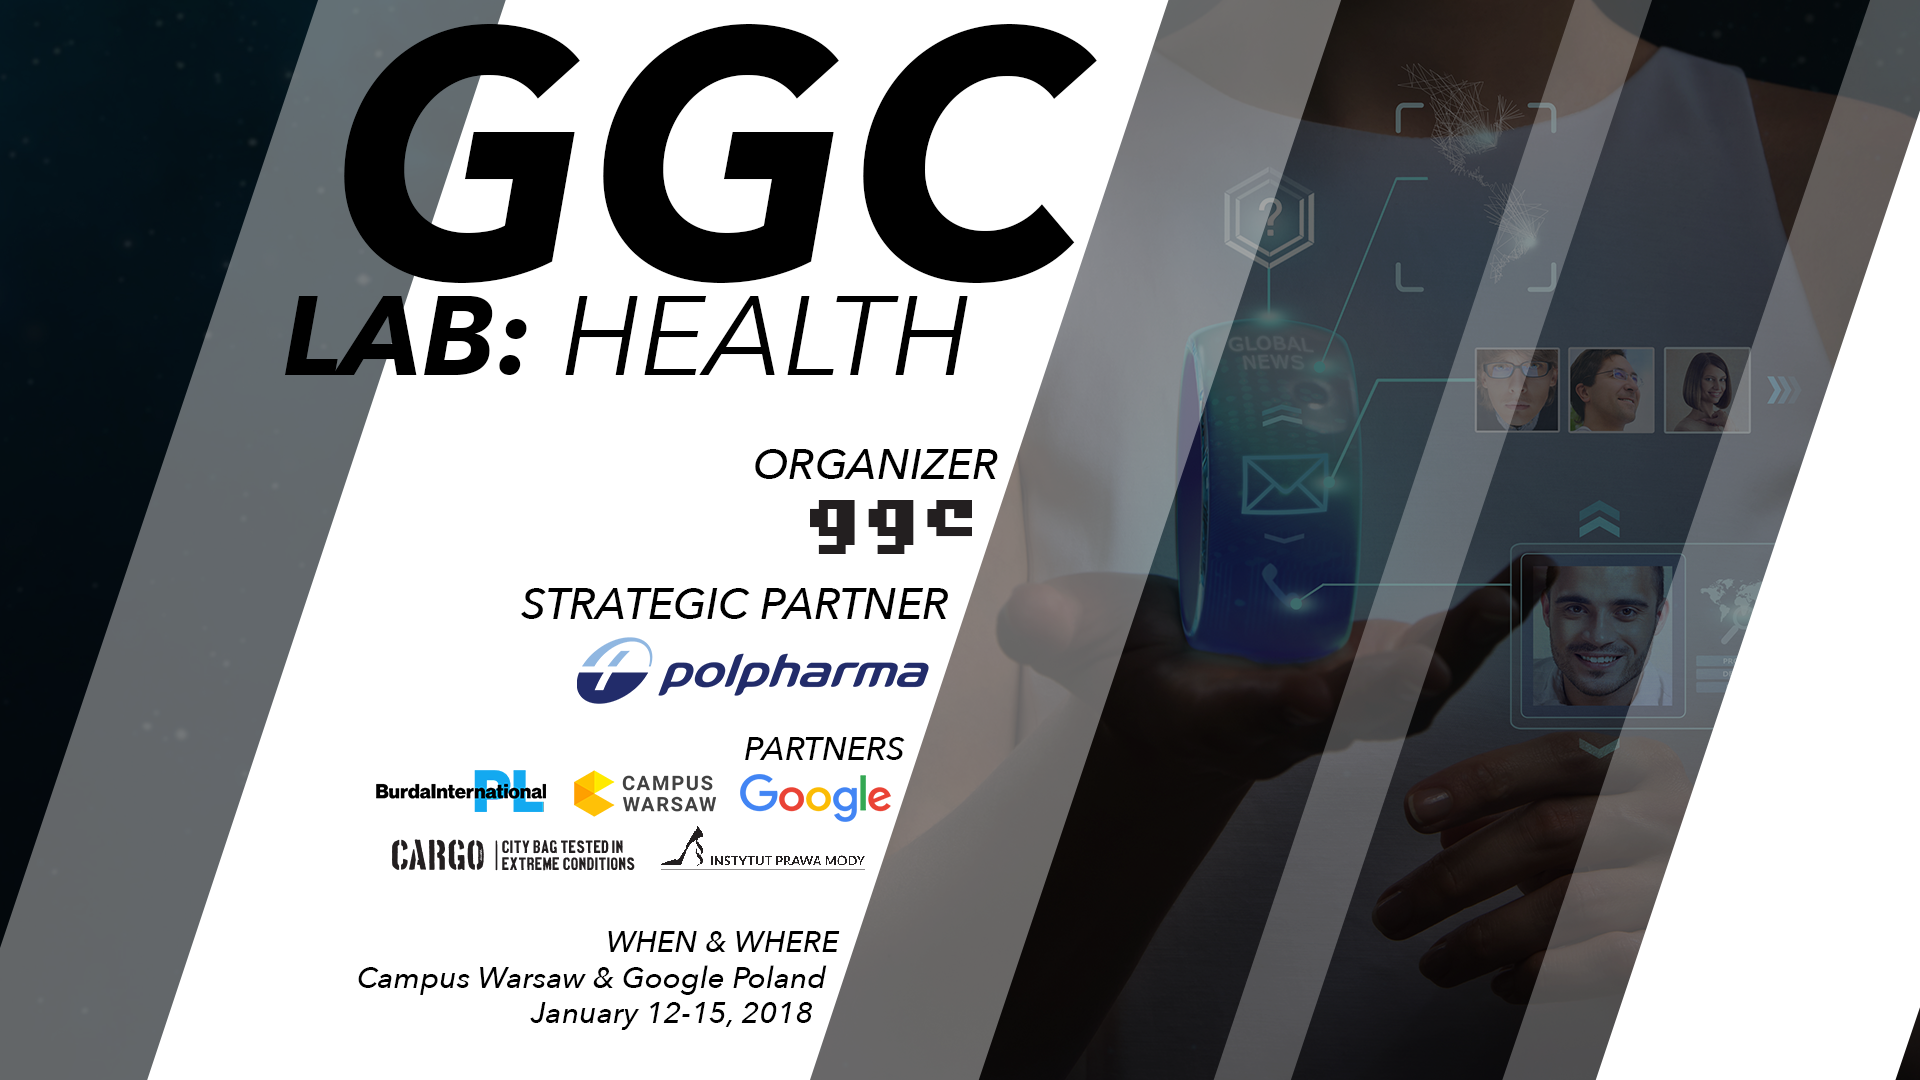 ggc-lab-health-styczen-2018